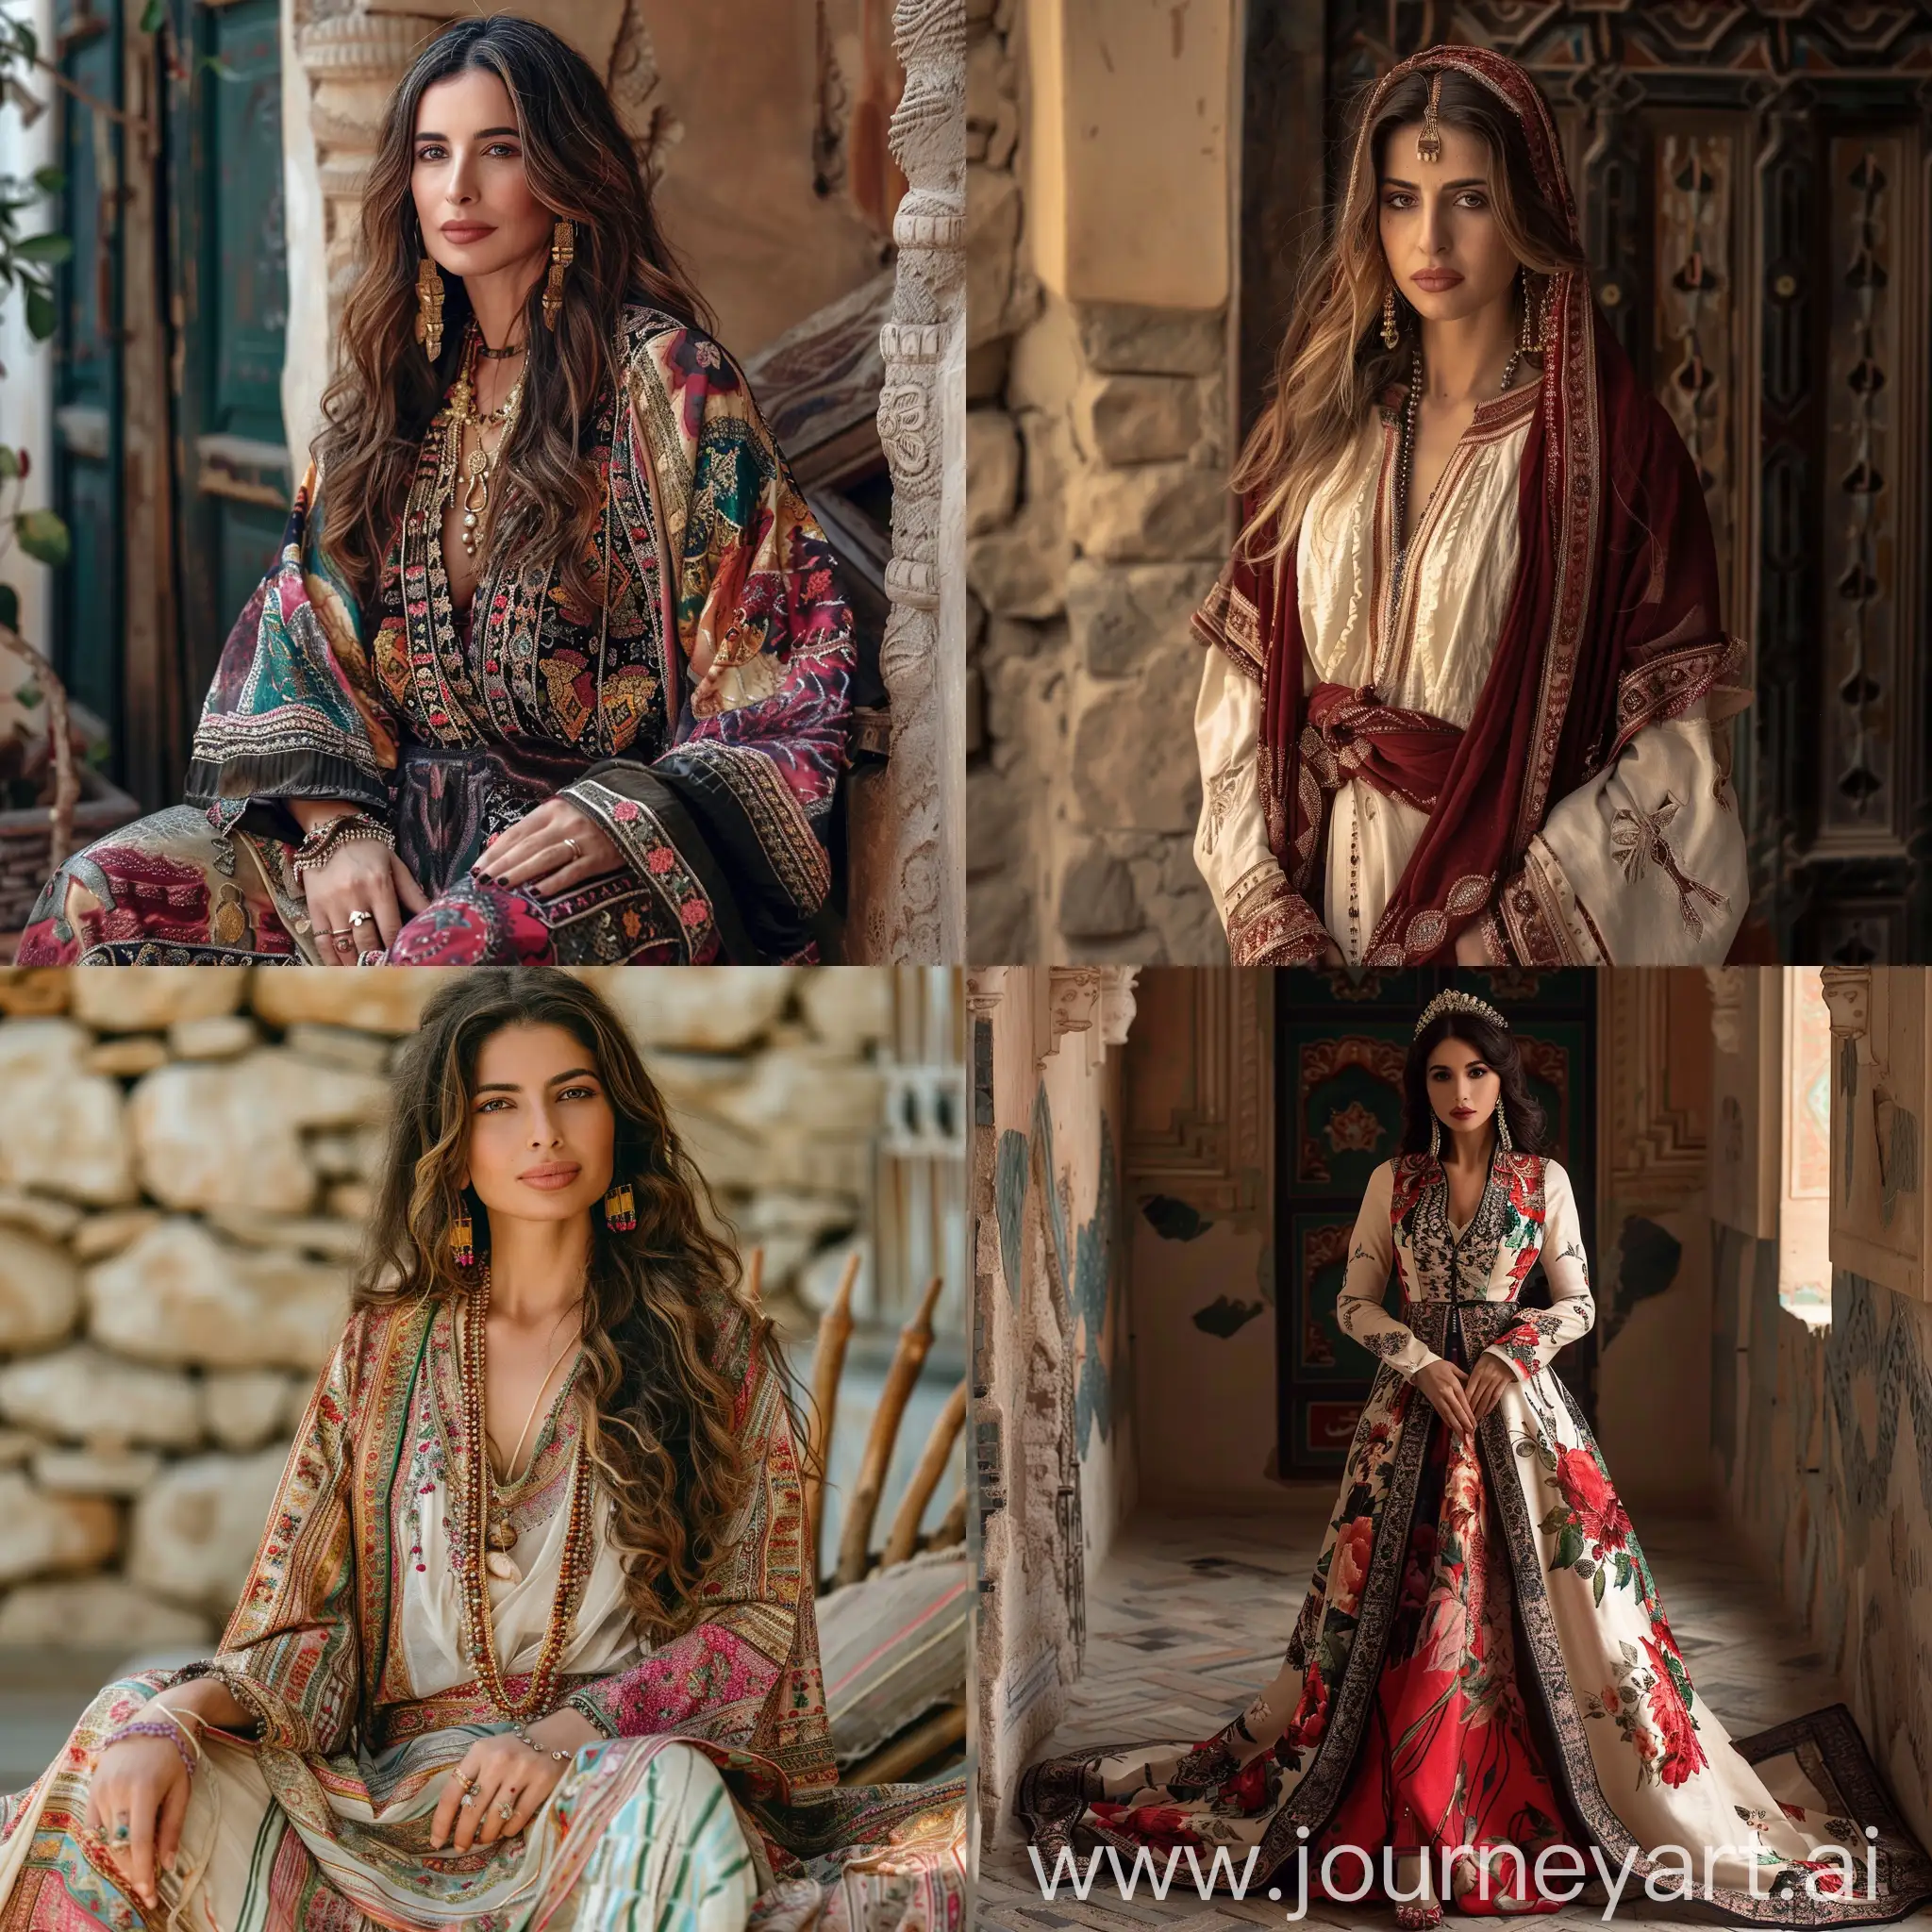 Nancy-Ajram-Wearing-Traditional-Sanaa-Dress-Portrait